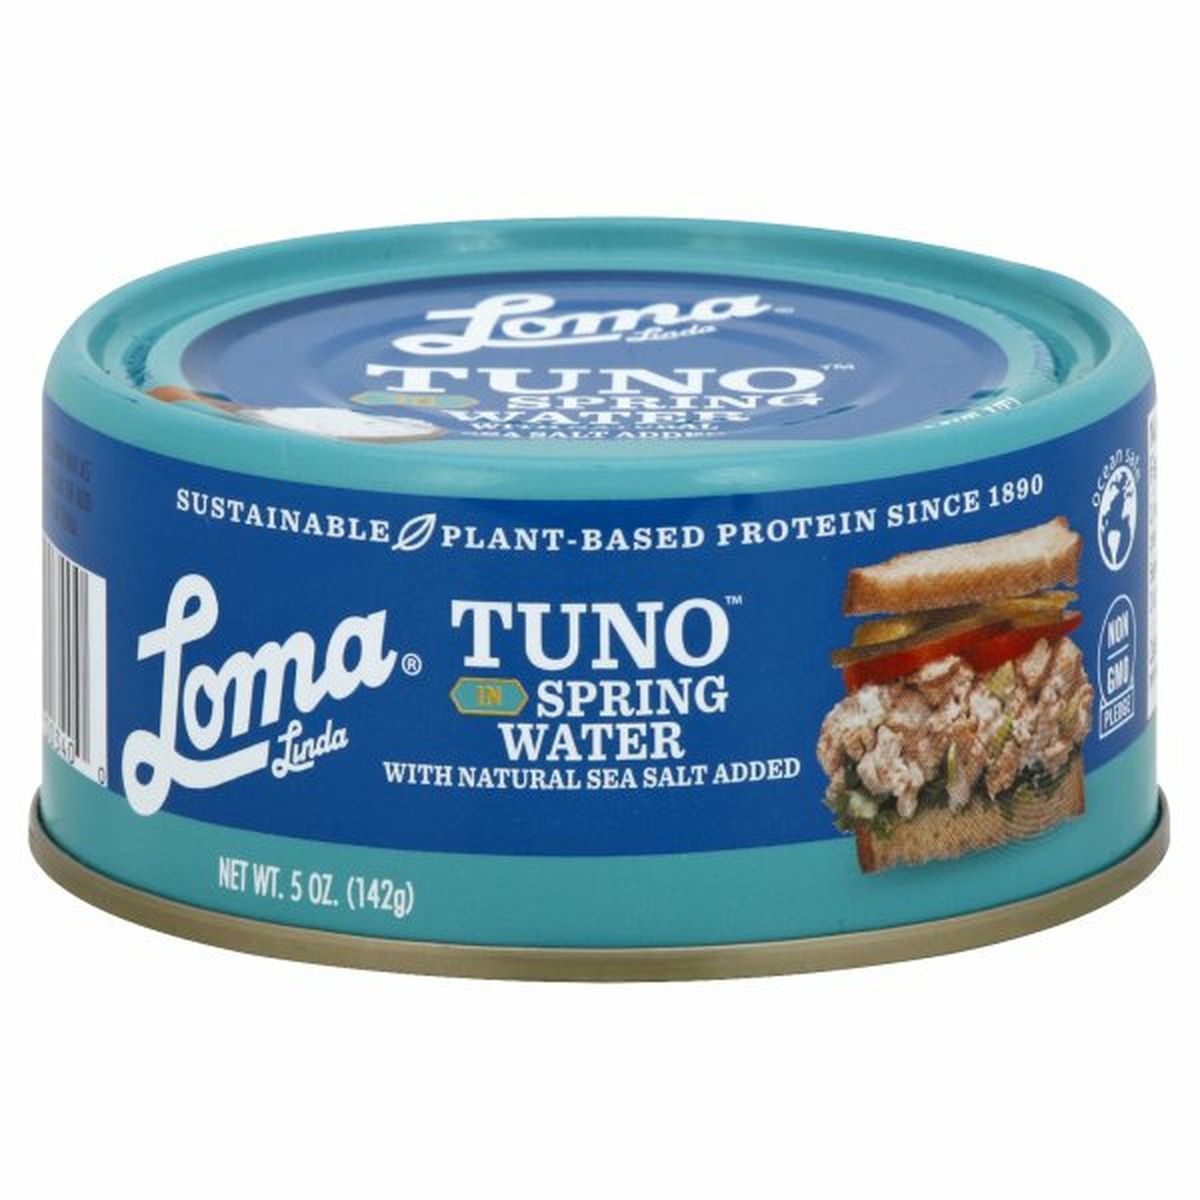 Calories in Loma Linda Tuno, in Spring Water